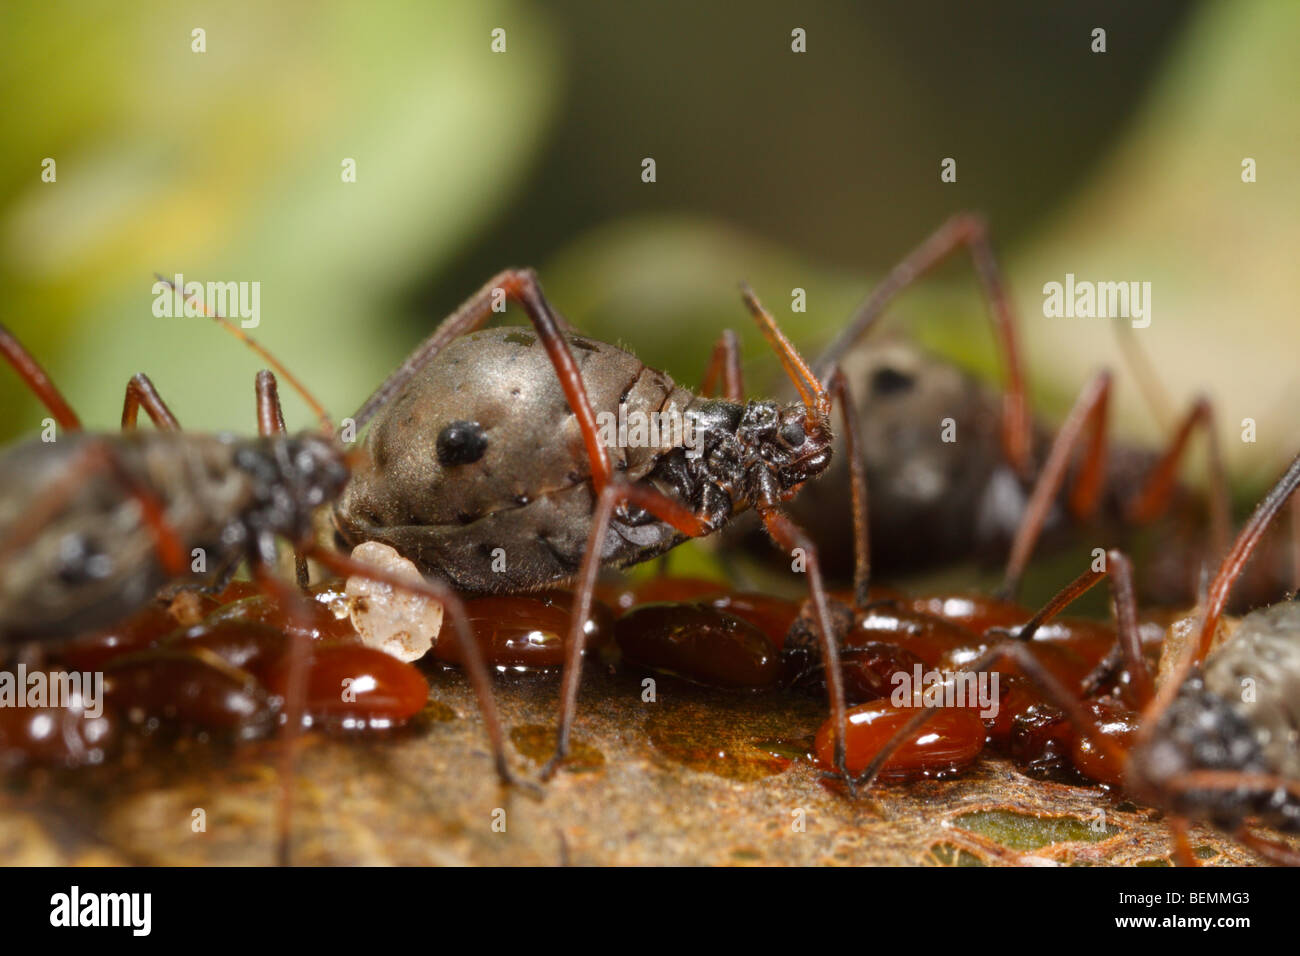 Lachnus roboris, an aphid that feeds on oak. This female guards freshly laid eggs. Stock Photo